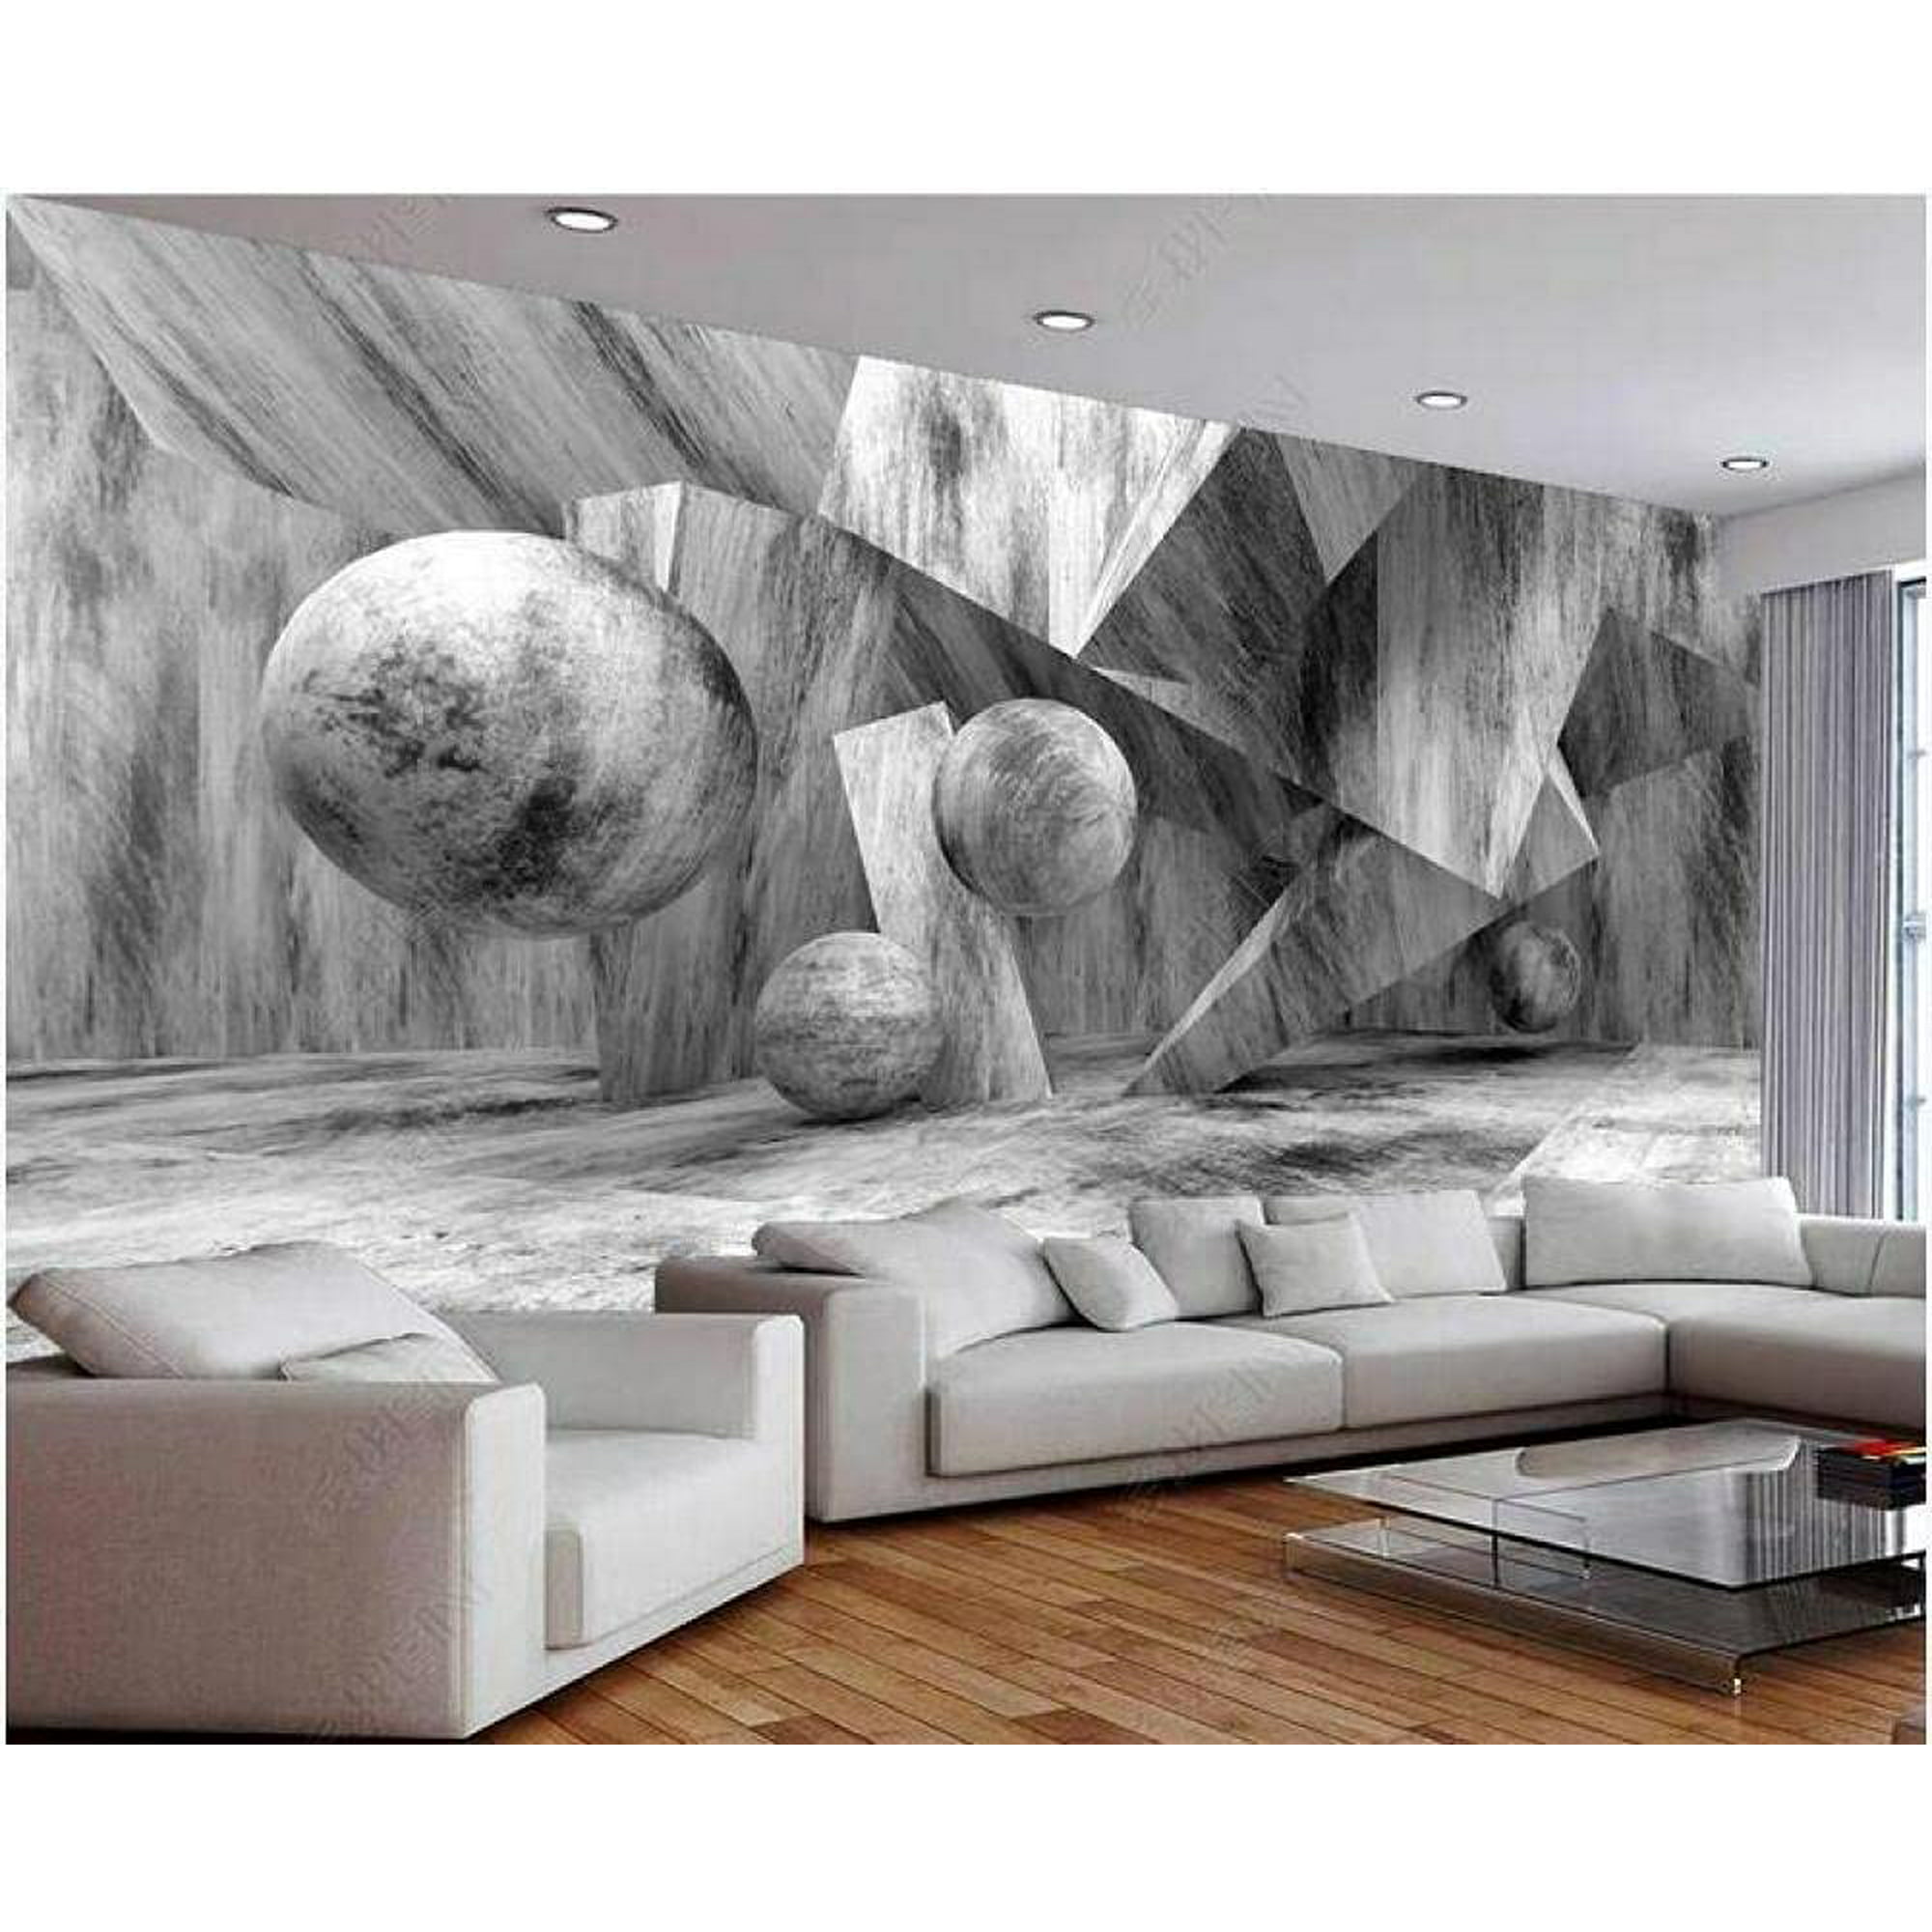 Wallpaper 3D Decoration Murals Wall Sphere 3D Round Ball Stone Cement Wall  Background Wall-150Cmx105Cm | Walmart Canada